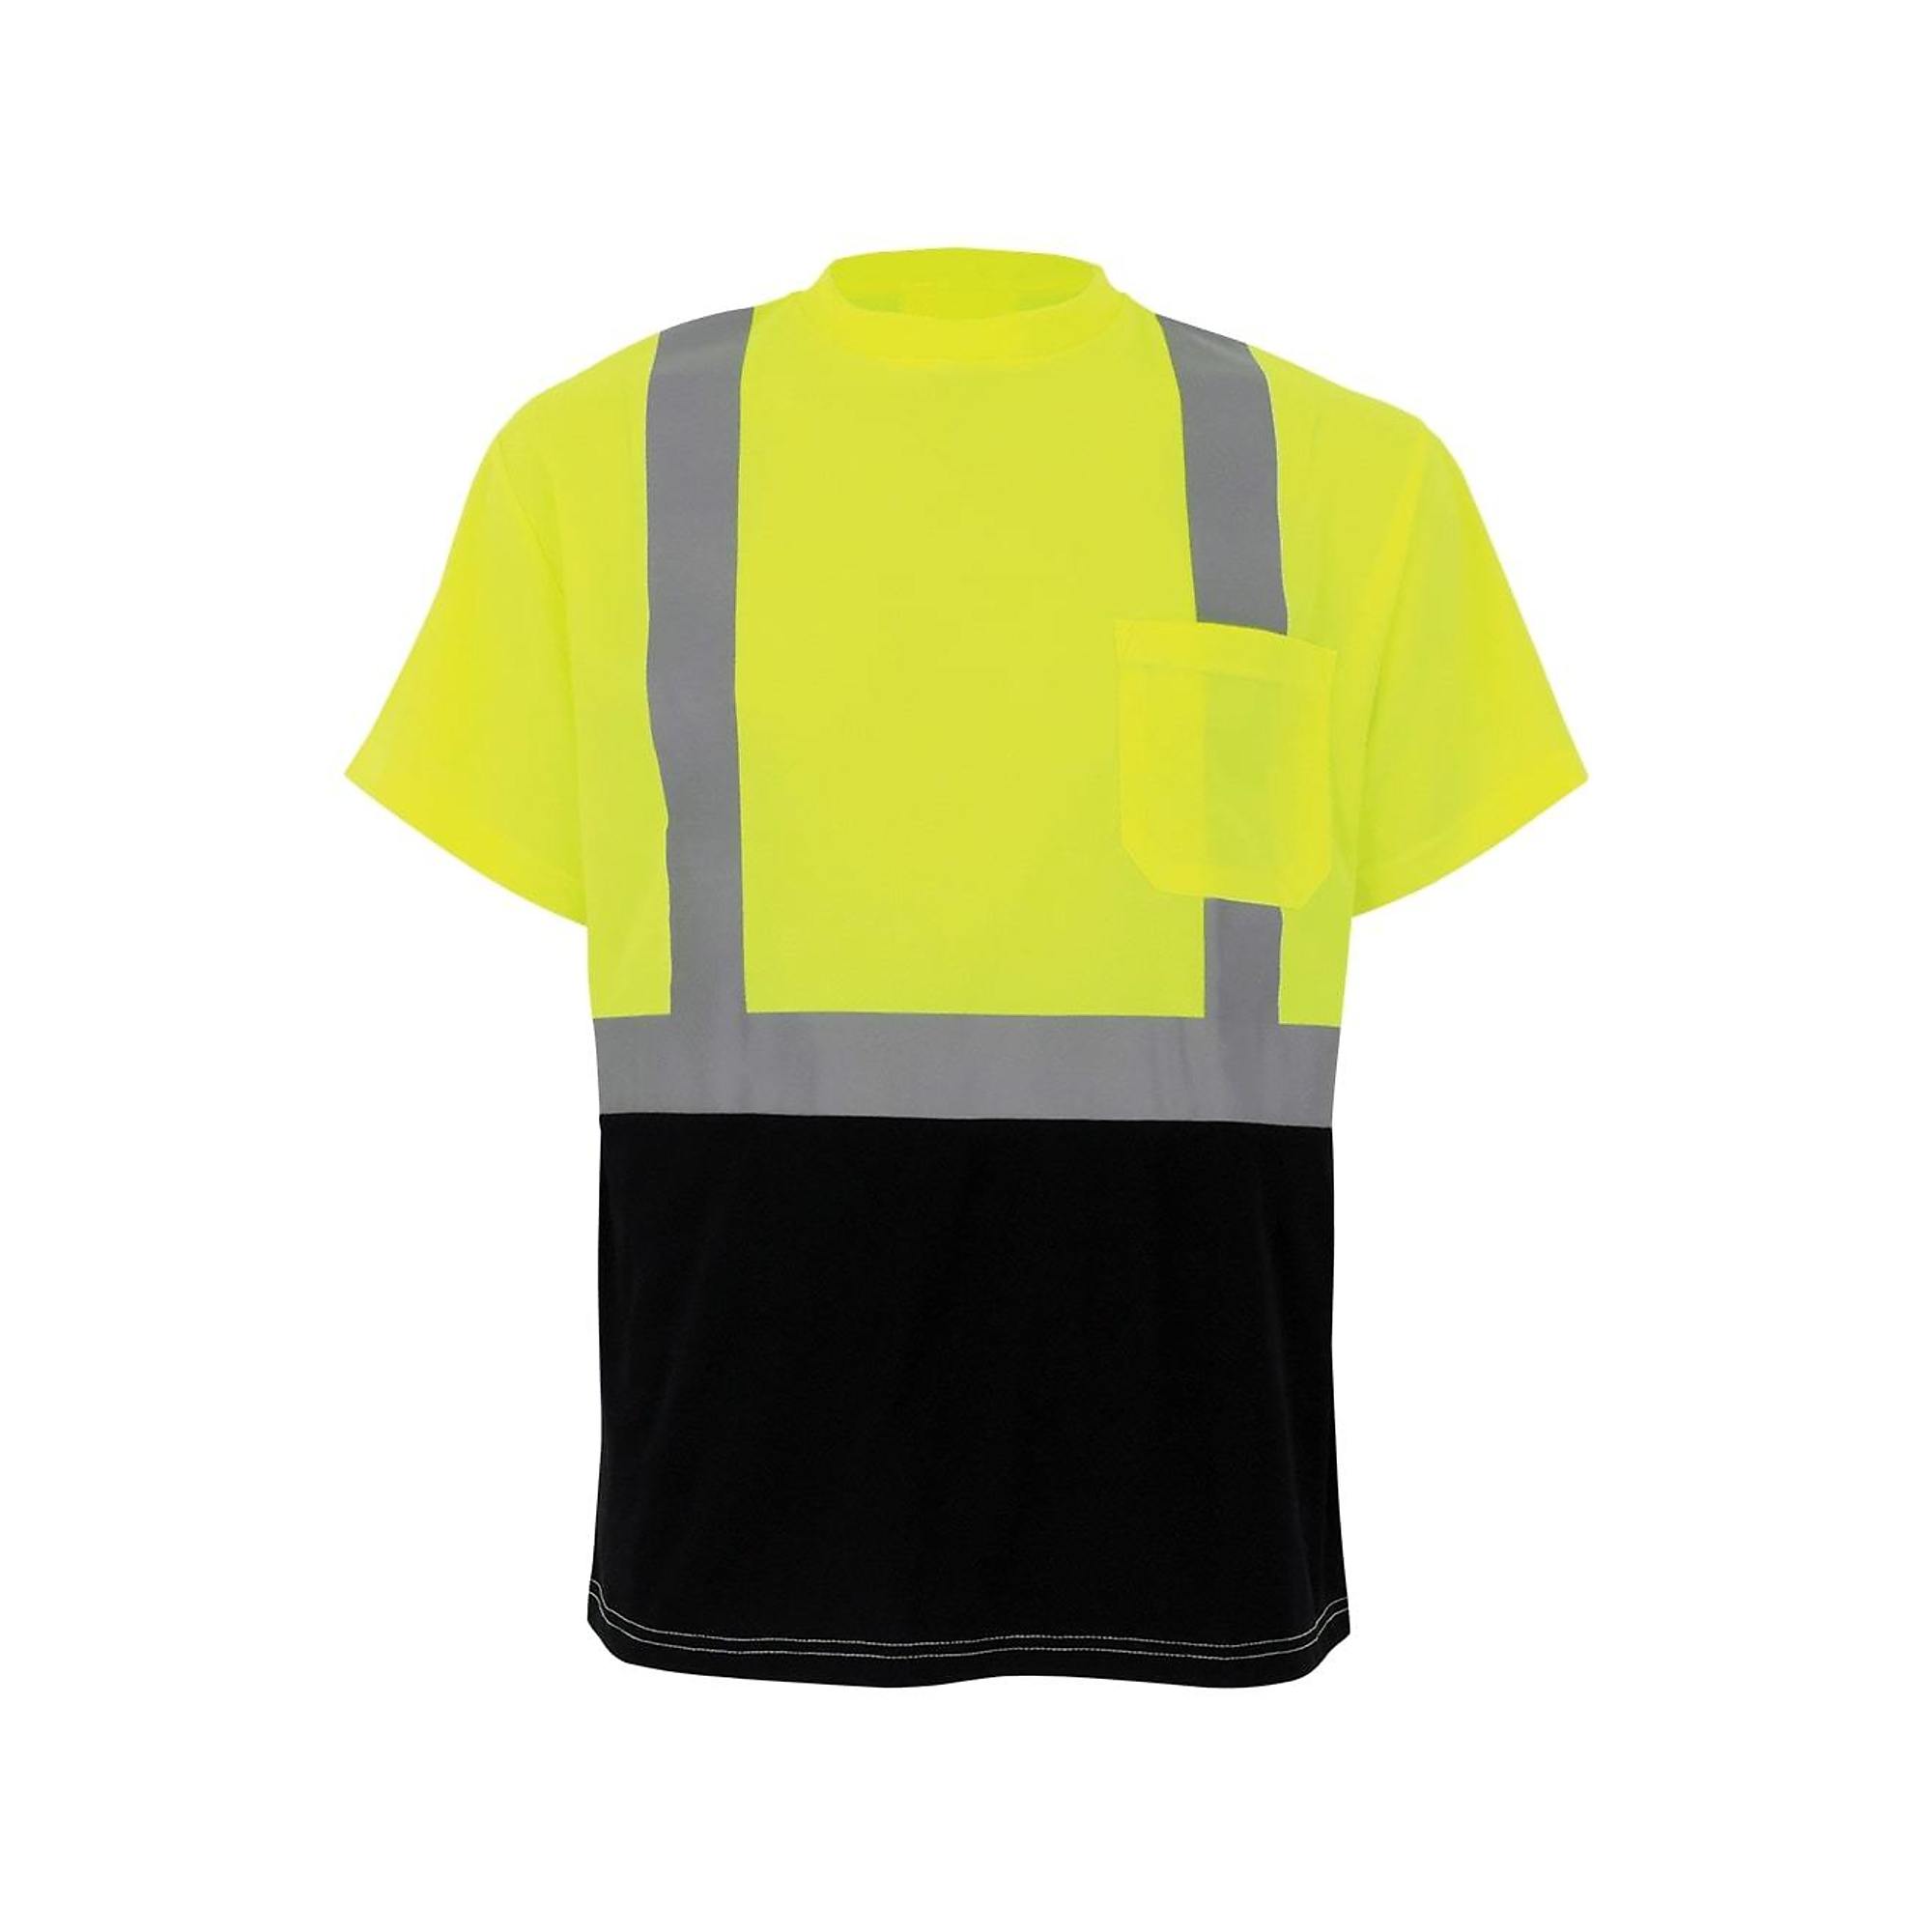 FrogWear, HV Yellow/Green, Class 2 Self-Wicking, Short-Sleeve Shirt, Size 5XL, Model GLO-007B-5XL